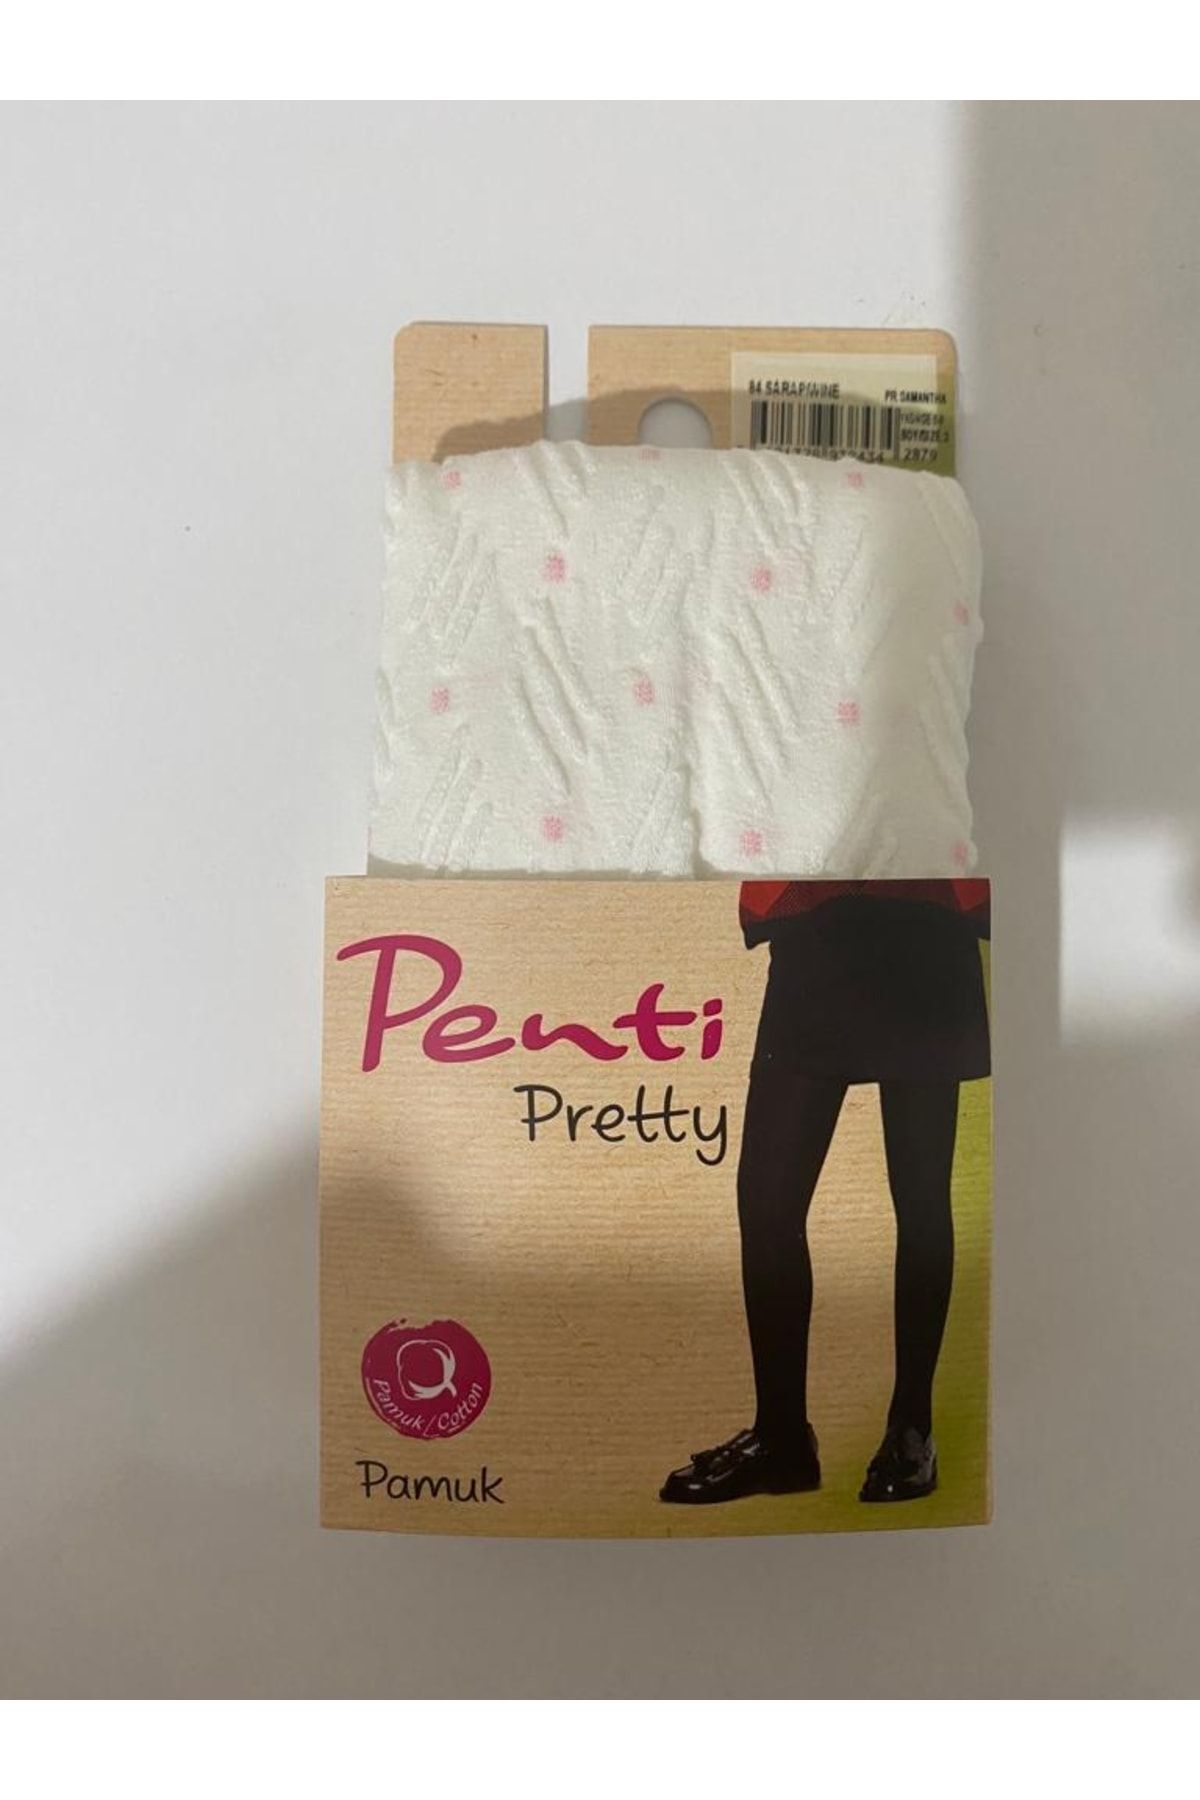 Penti Pretty Cotton Pamuk Kalın Külotlu Çorap